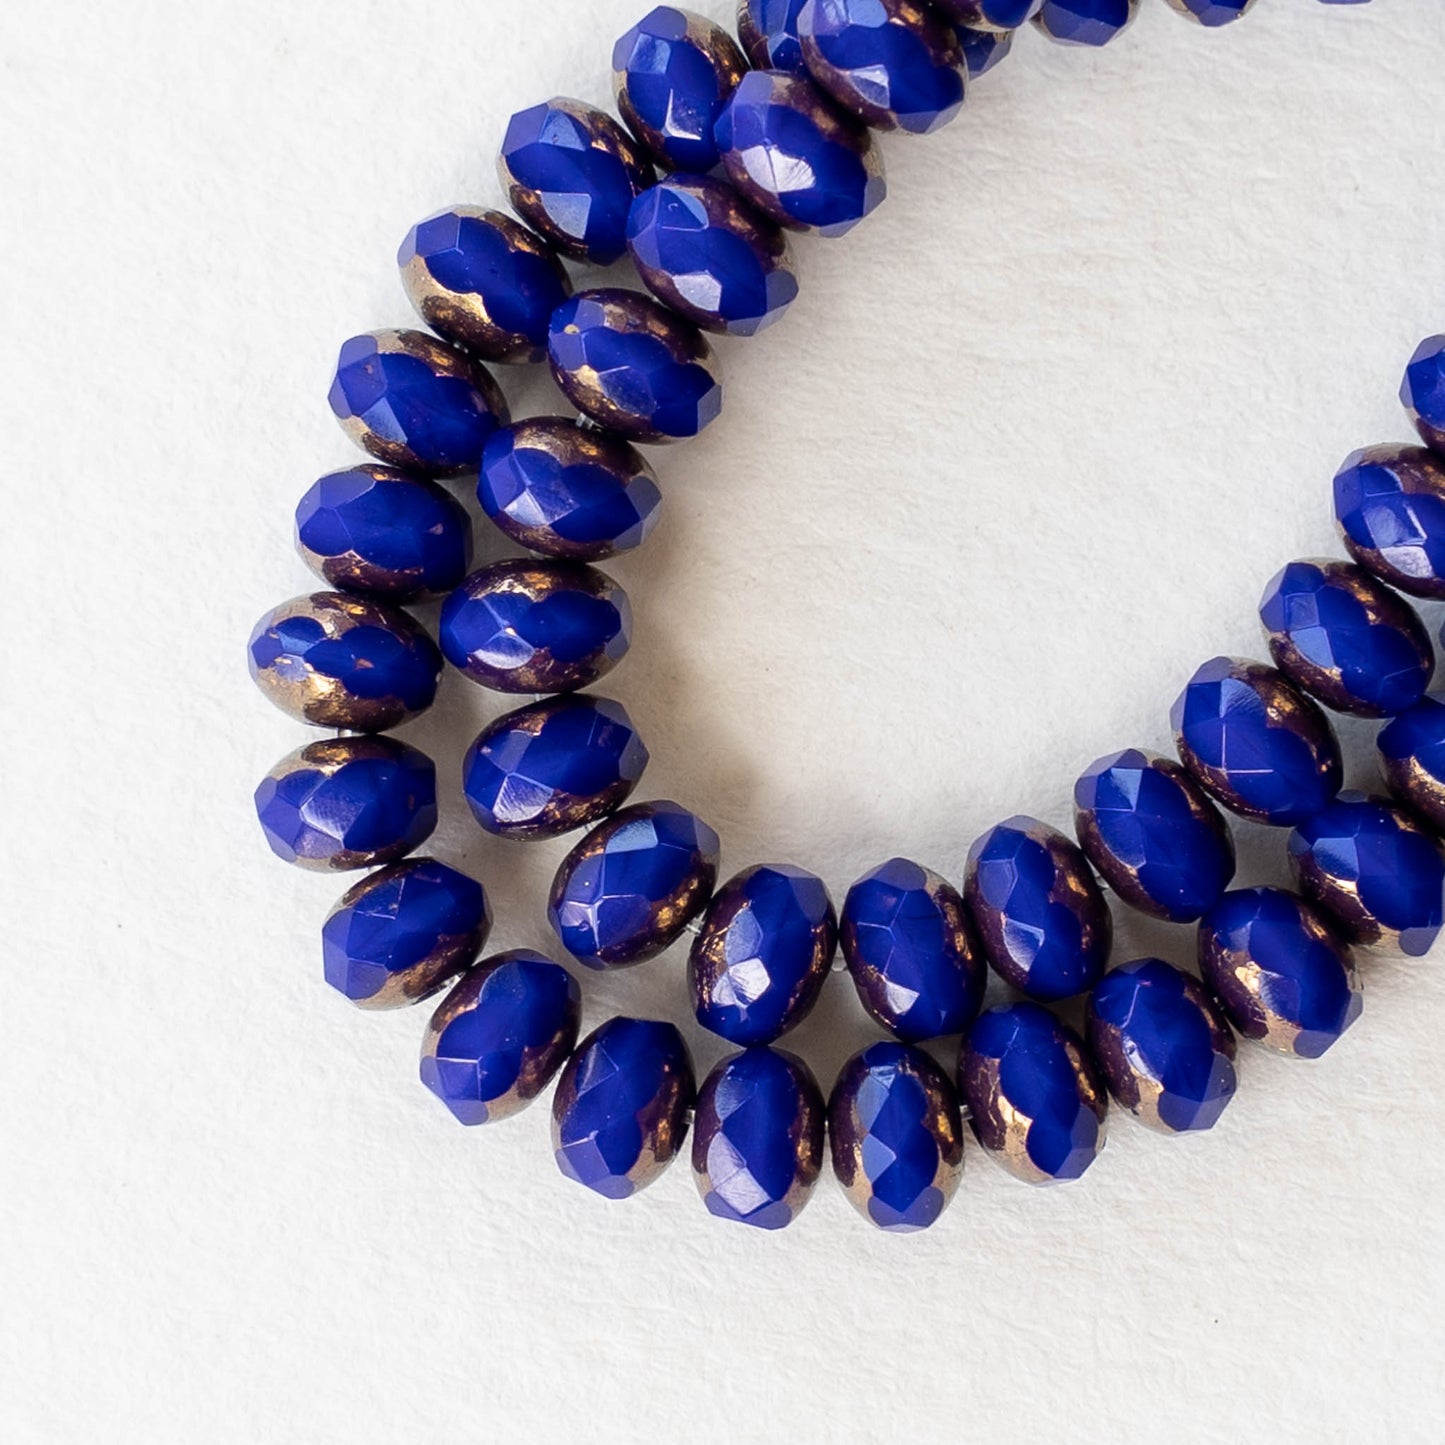 3x5mm Rondelle Firepolished Beads - Indigo Blue with a Bronze Finish - 30 Beads